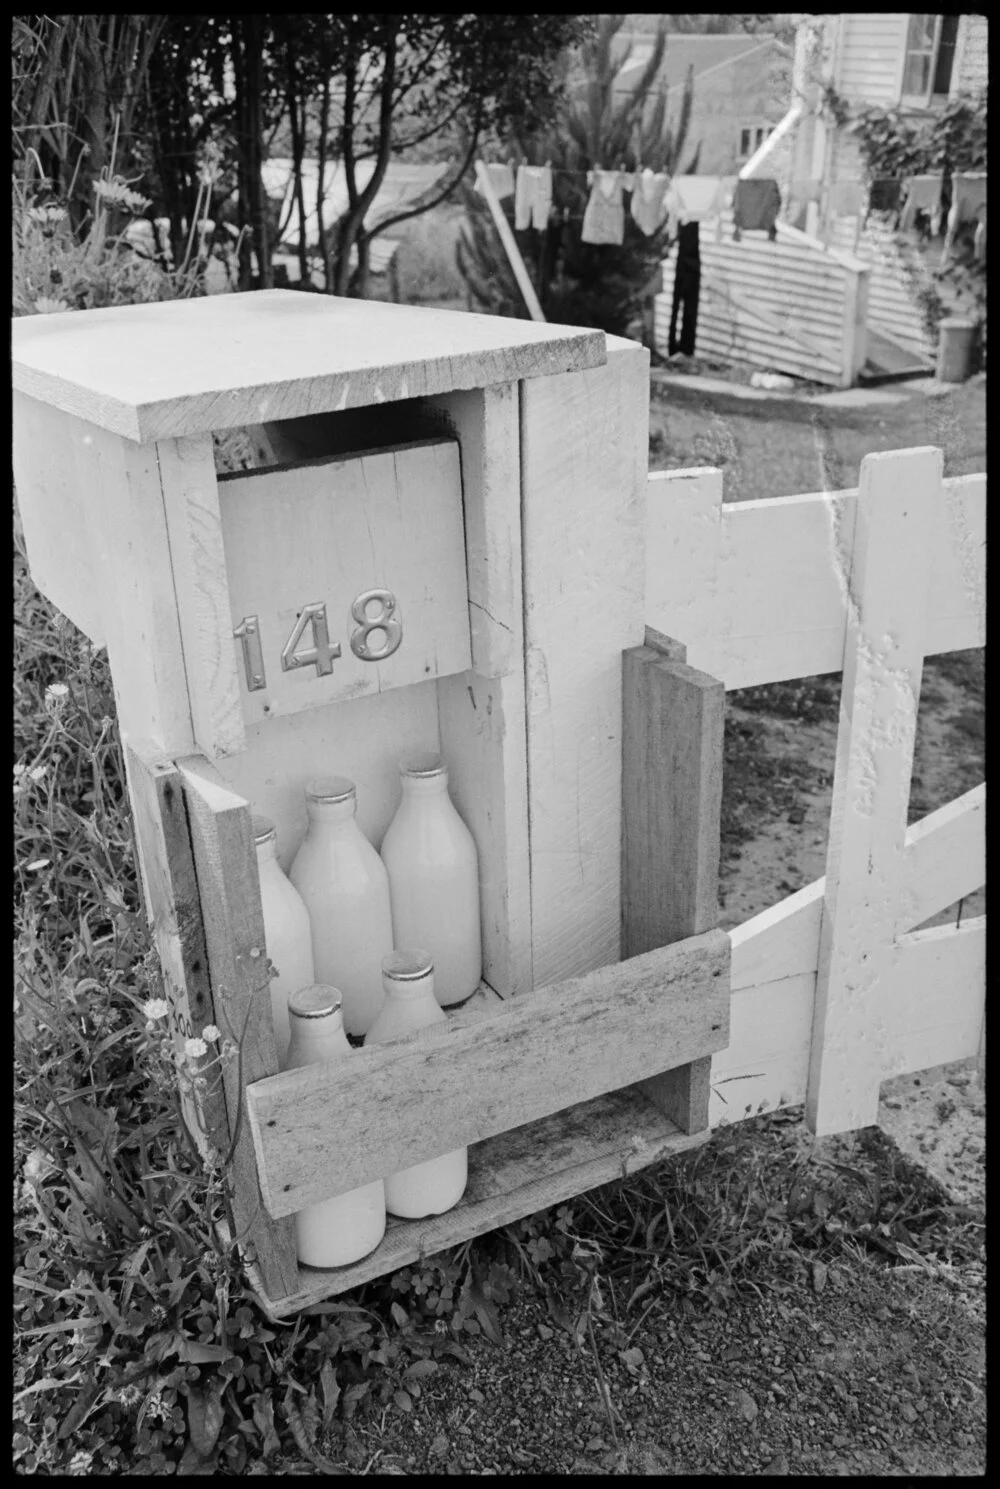 Temptation for thieves flat. Milk bottles